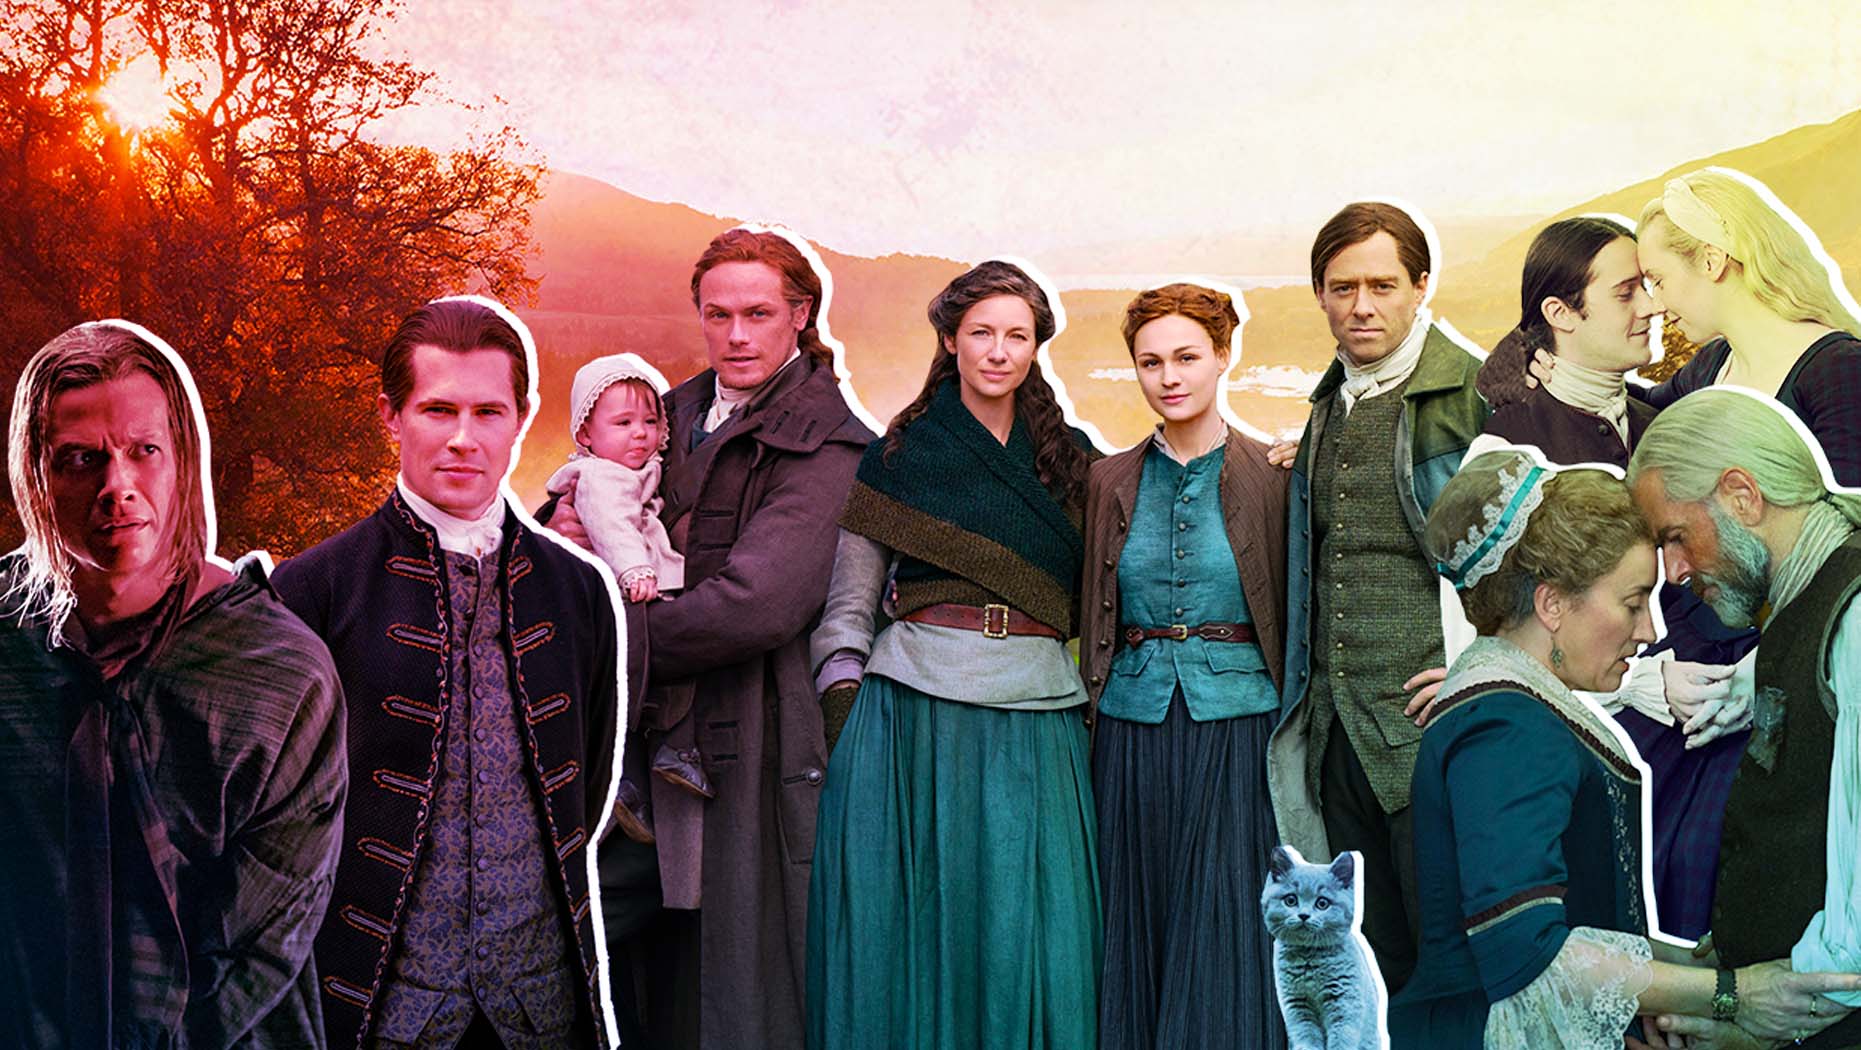 Outlander Season 6 release date on Netflix in multiple regions around the world

